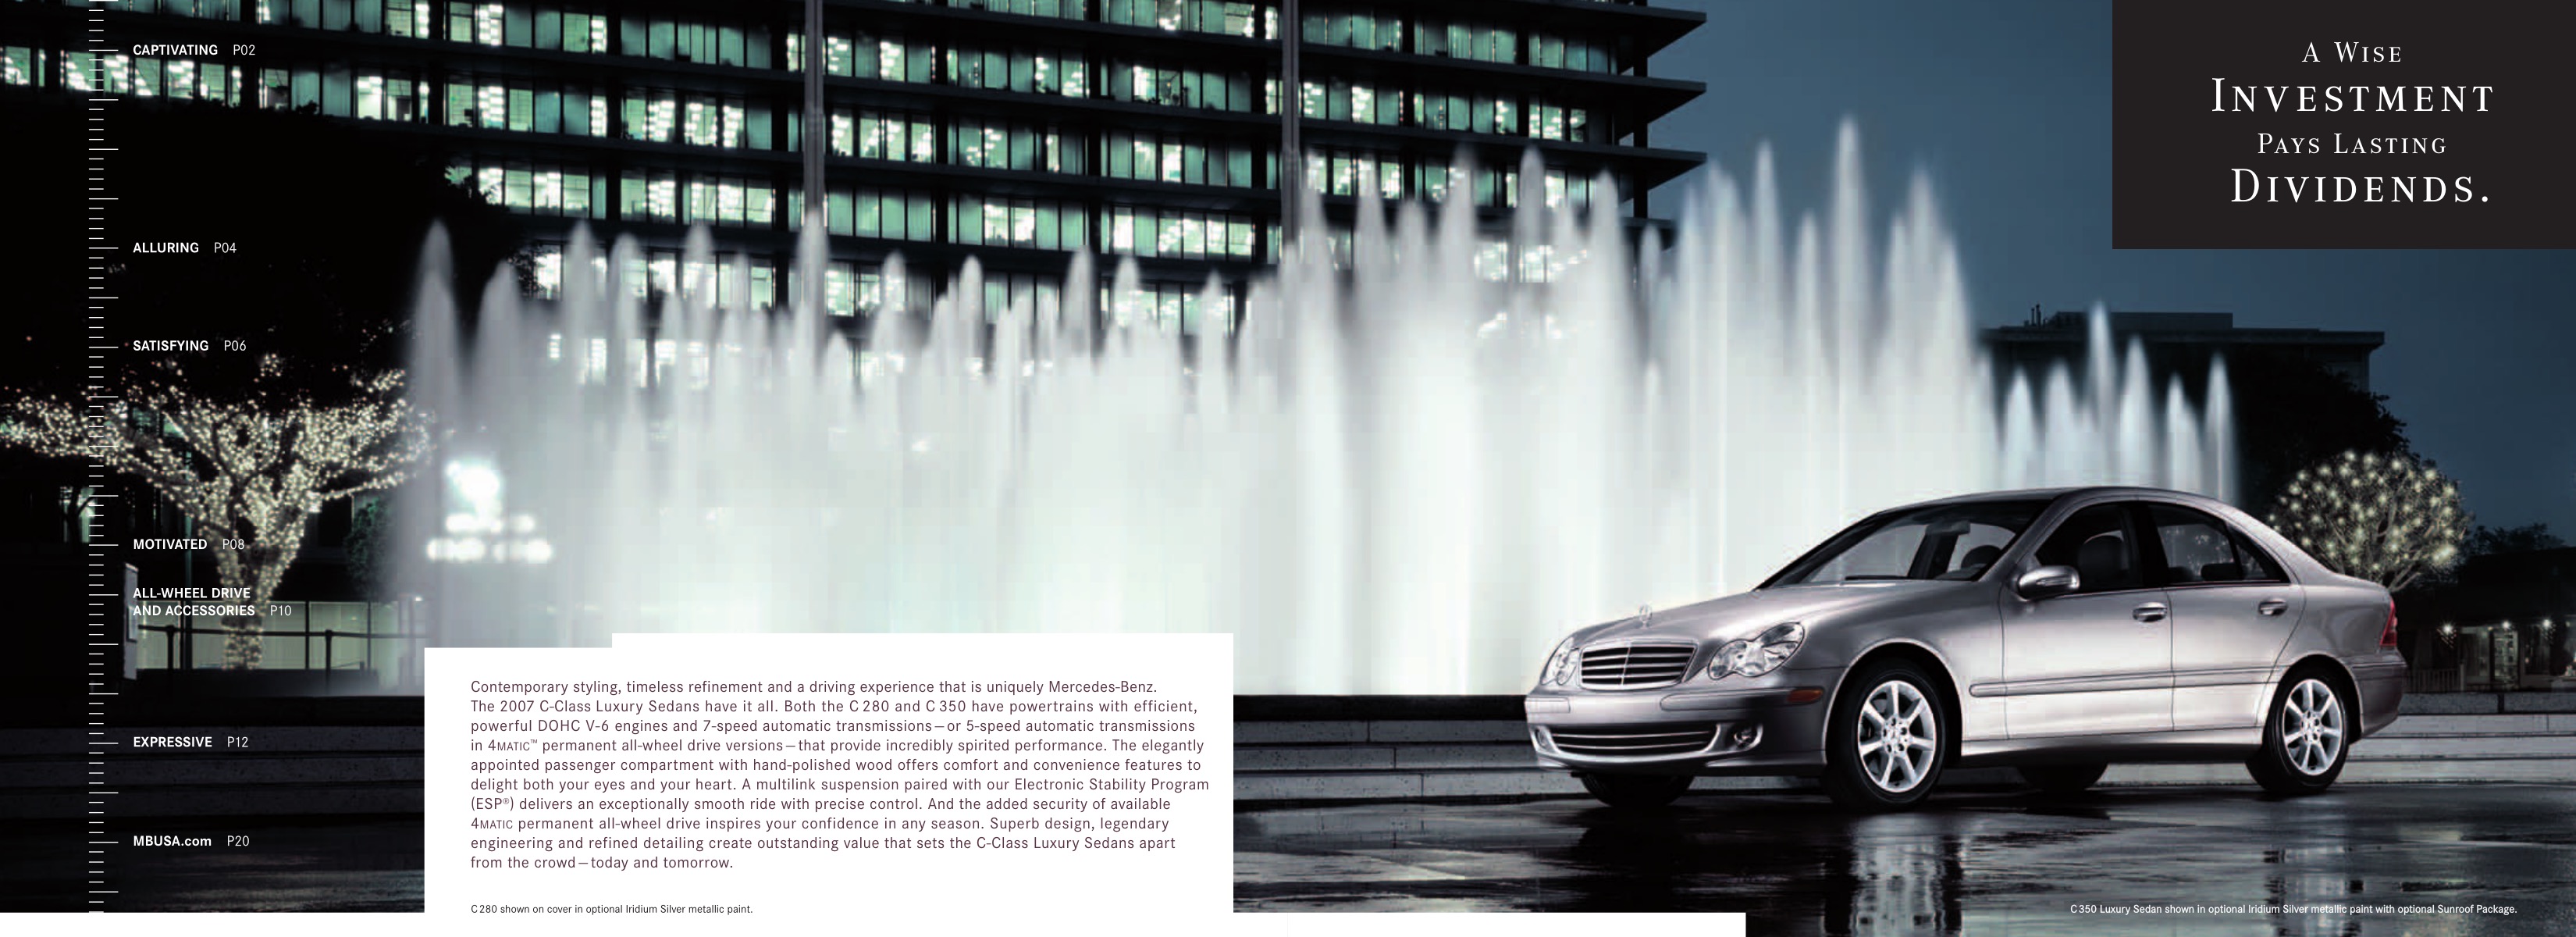 2007 Mercedes-Benz C-Class Luxury Brochure Page 2